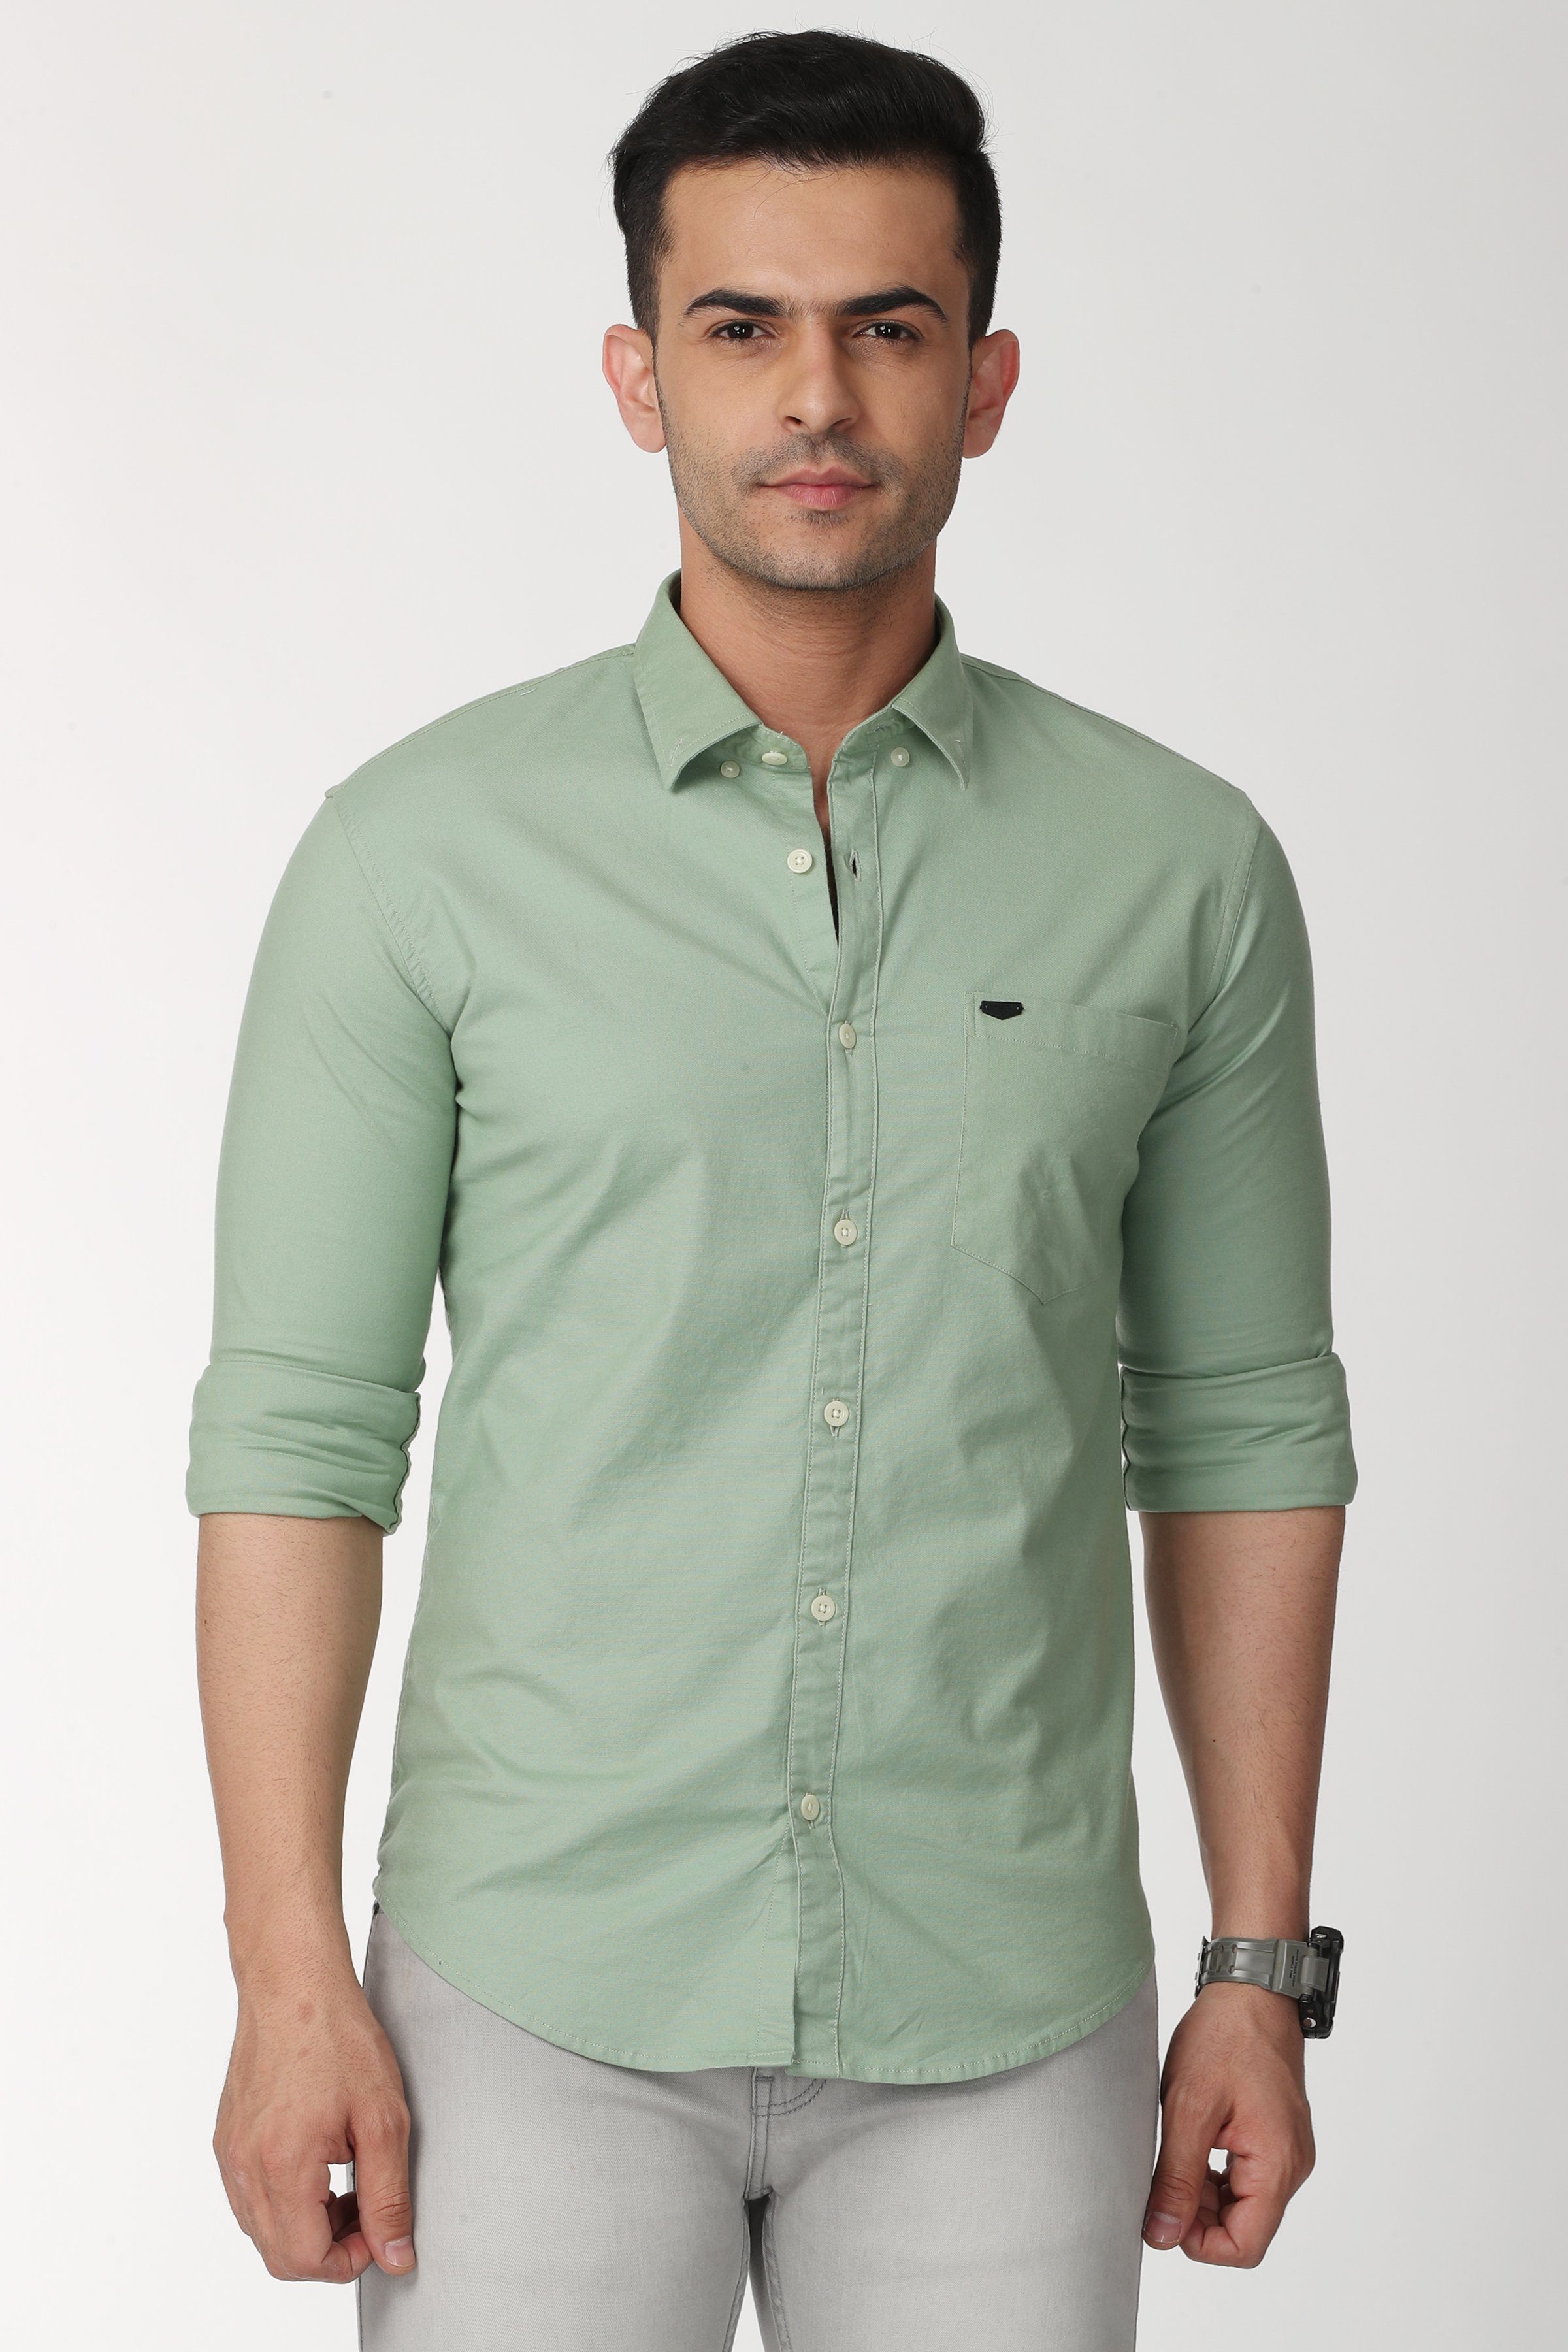 Unique Green Plain Full Sleeve Shirt Shirts KEF S 